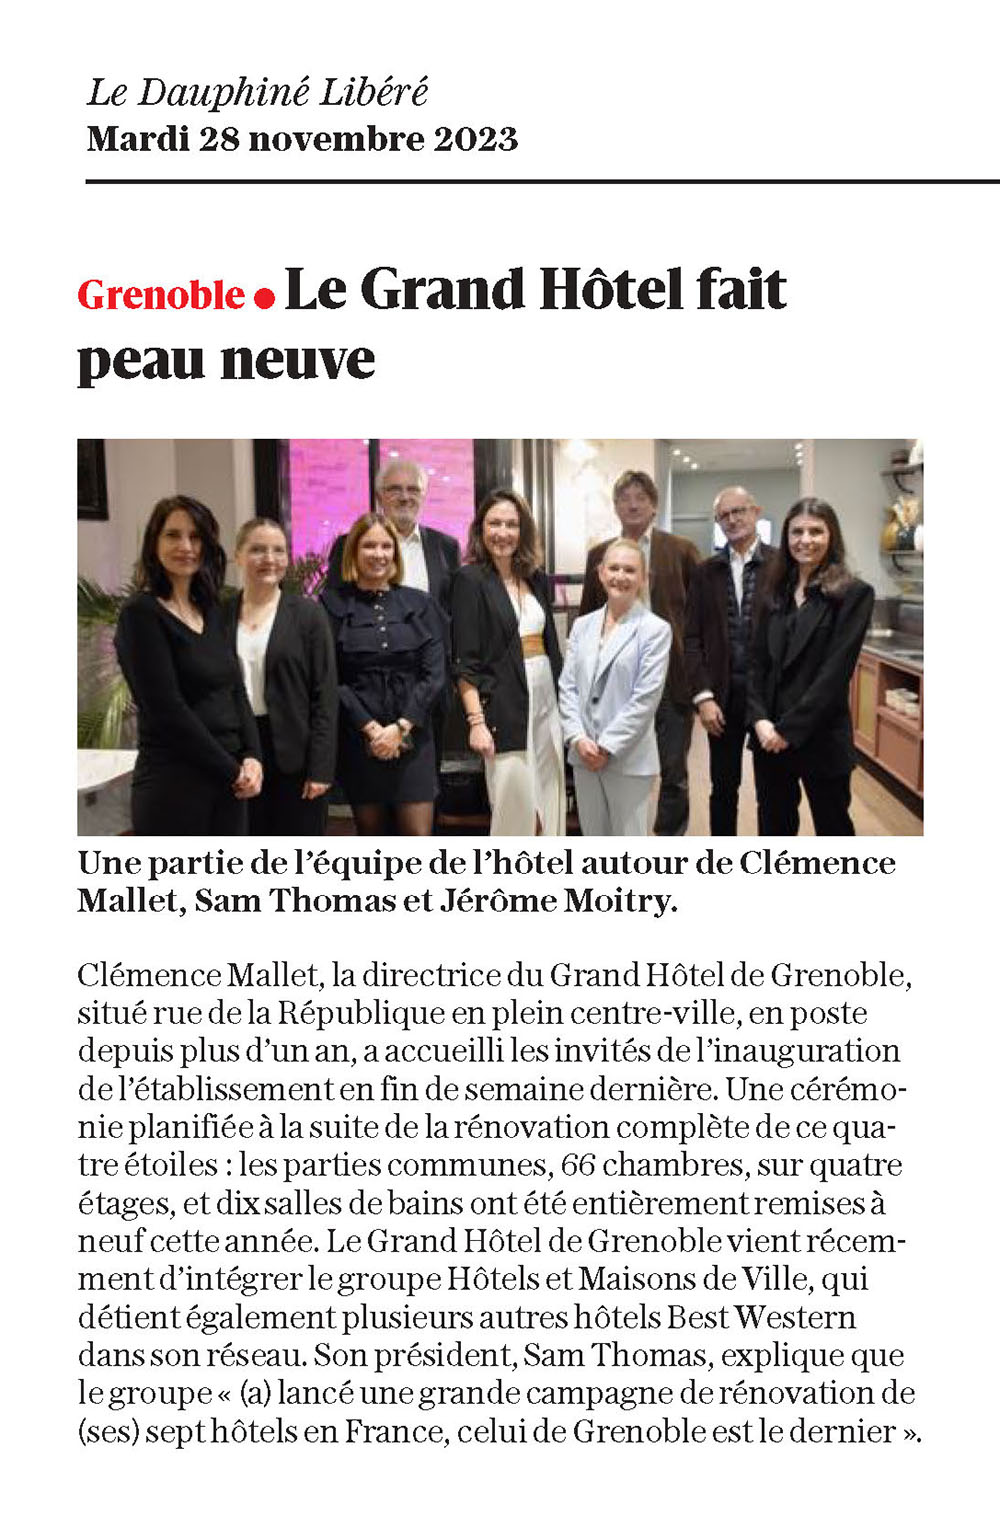 Le-Dauphine-Inauguration-Grand-Hotel-Grenoble